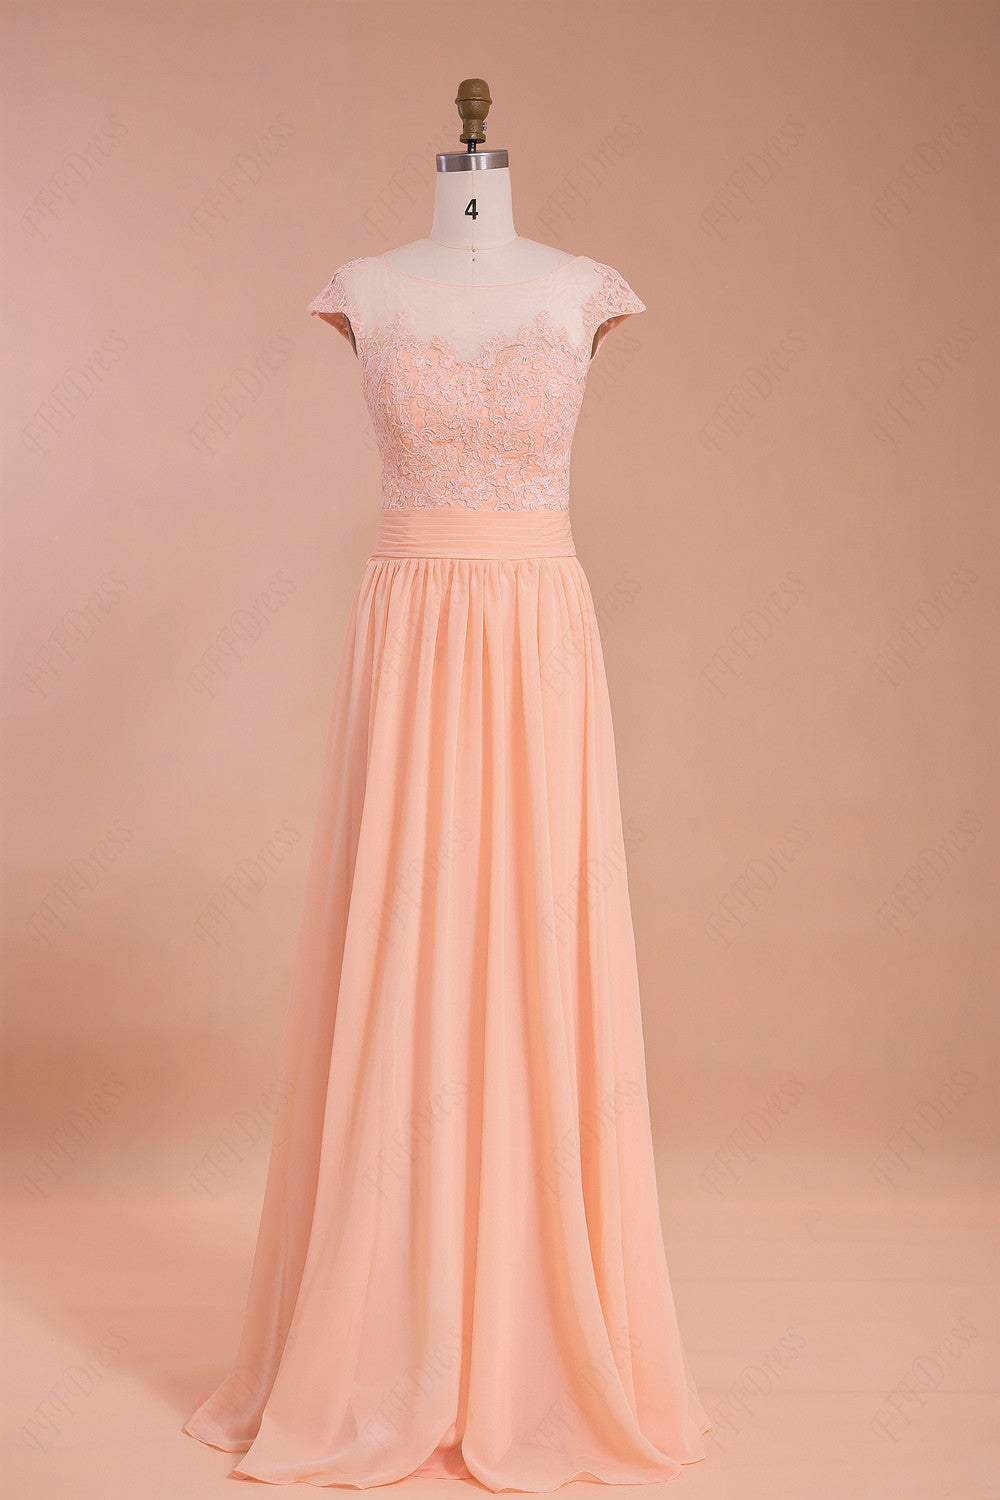 Peach color long modest prom dresses bridesmaid dresses